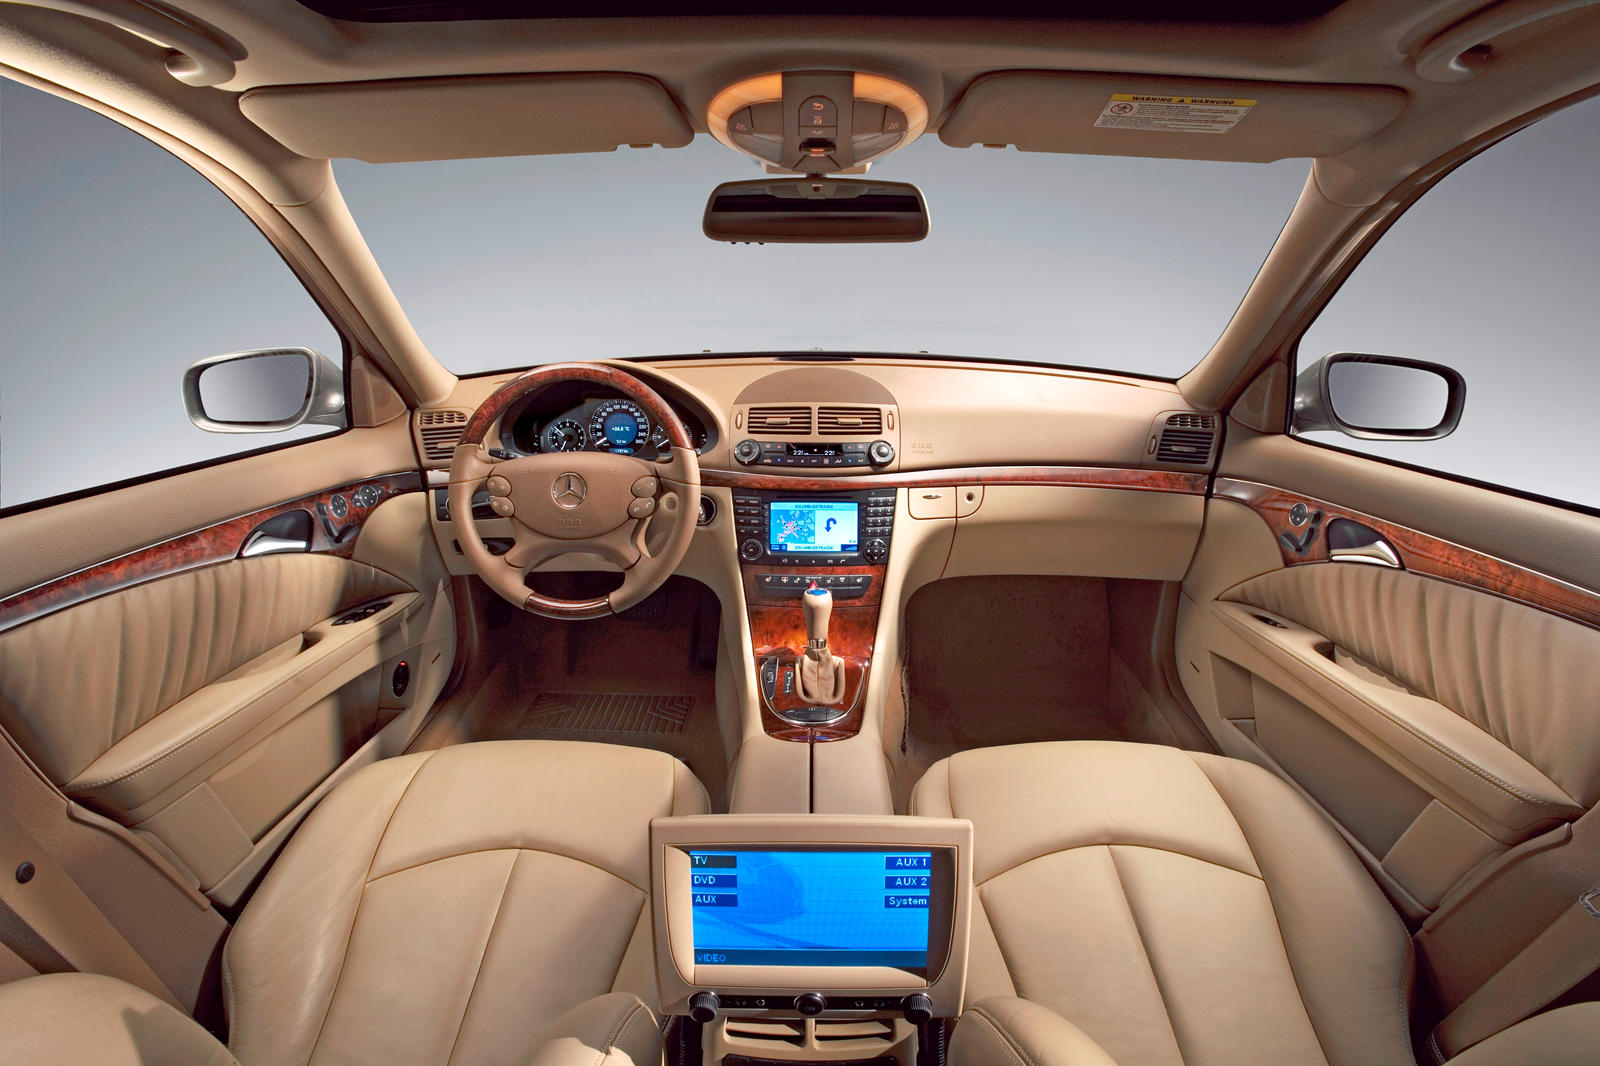 2009 Mercedes-Benz E-Class Sedan Interior Overview